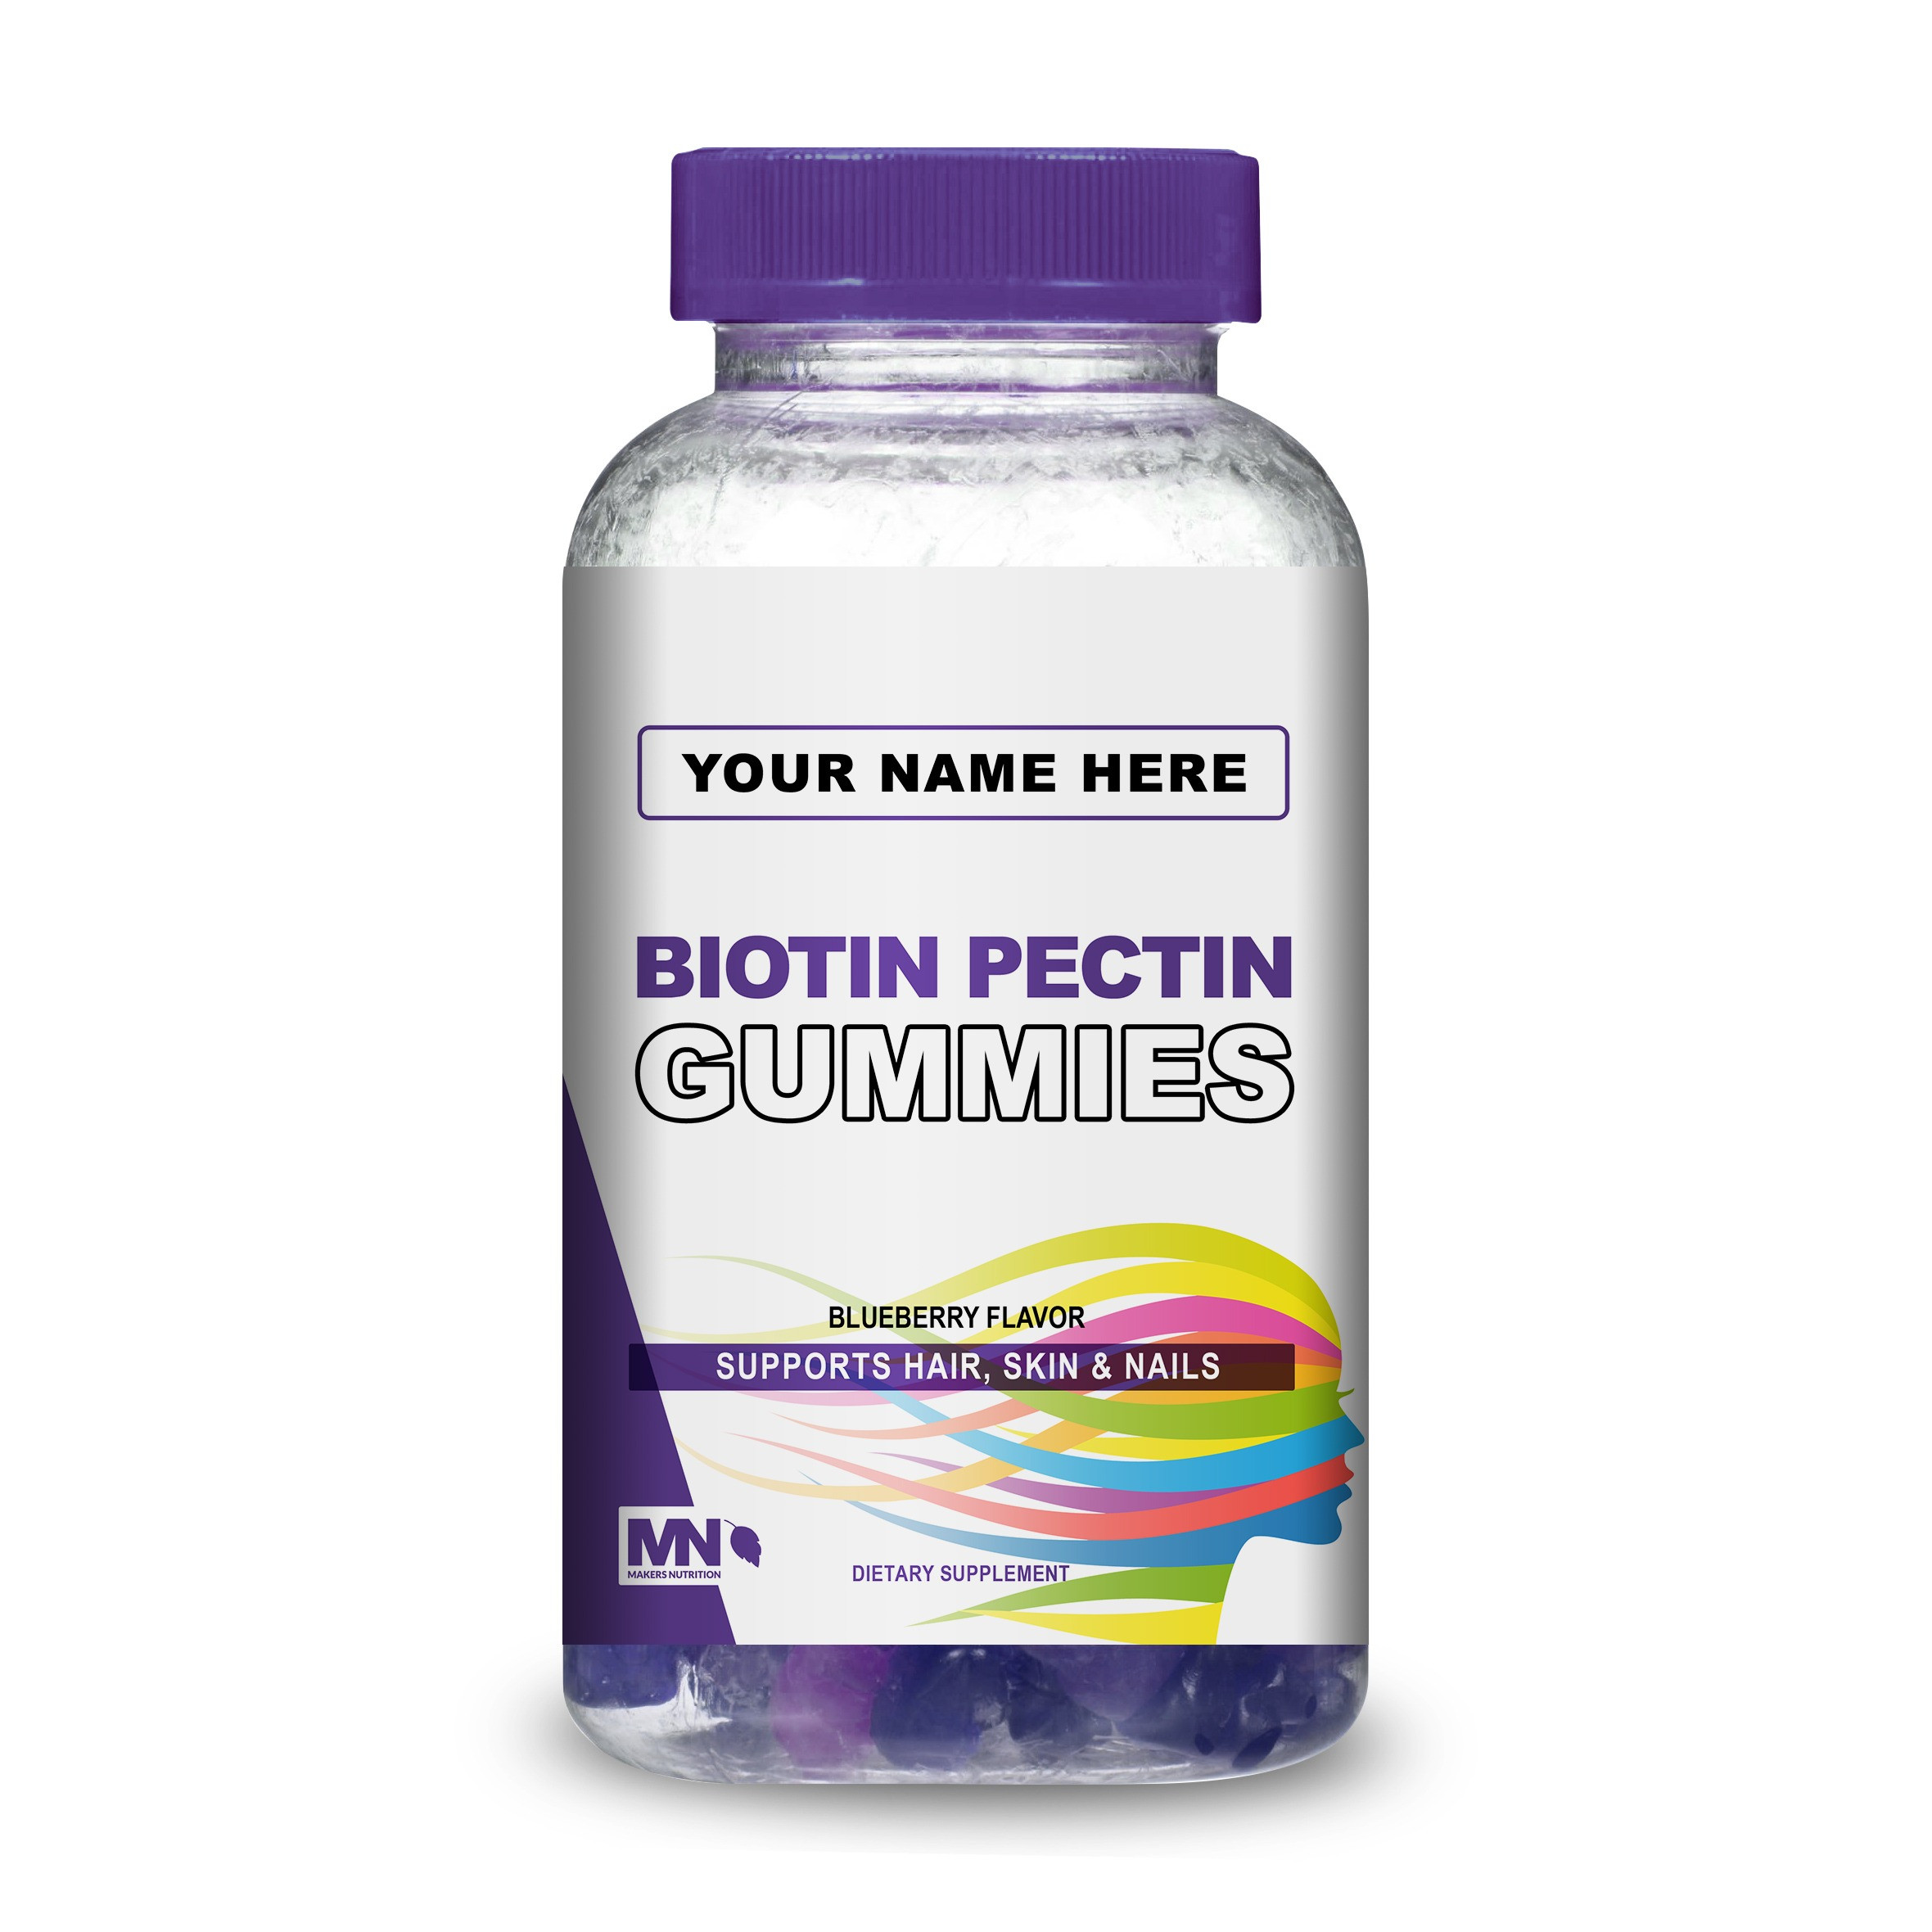 Biotin Pectin Gummies